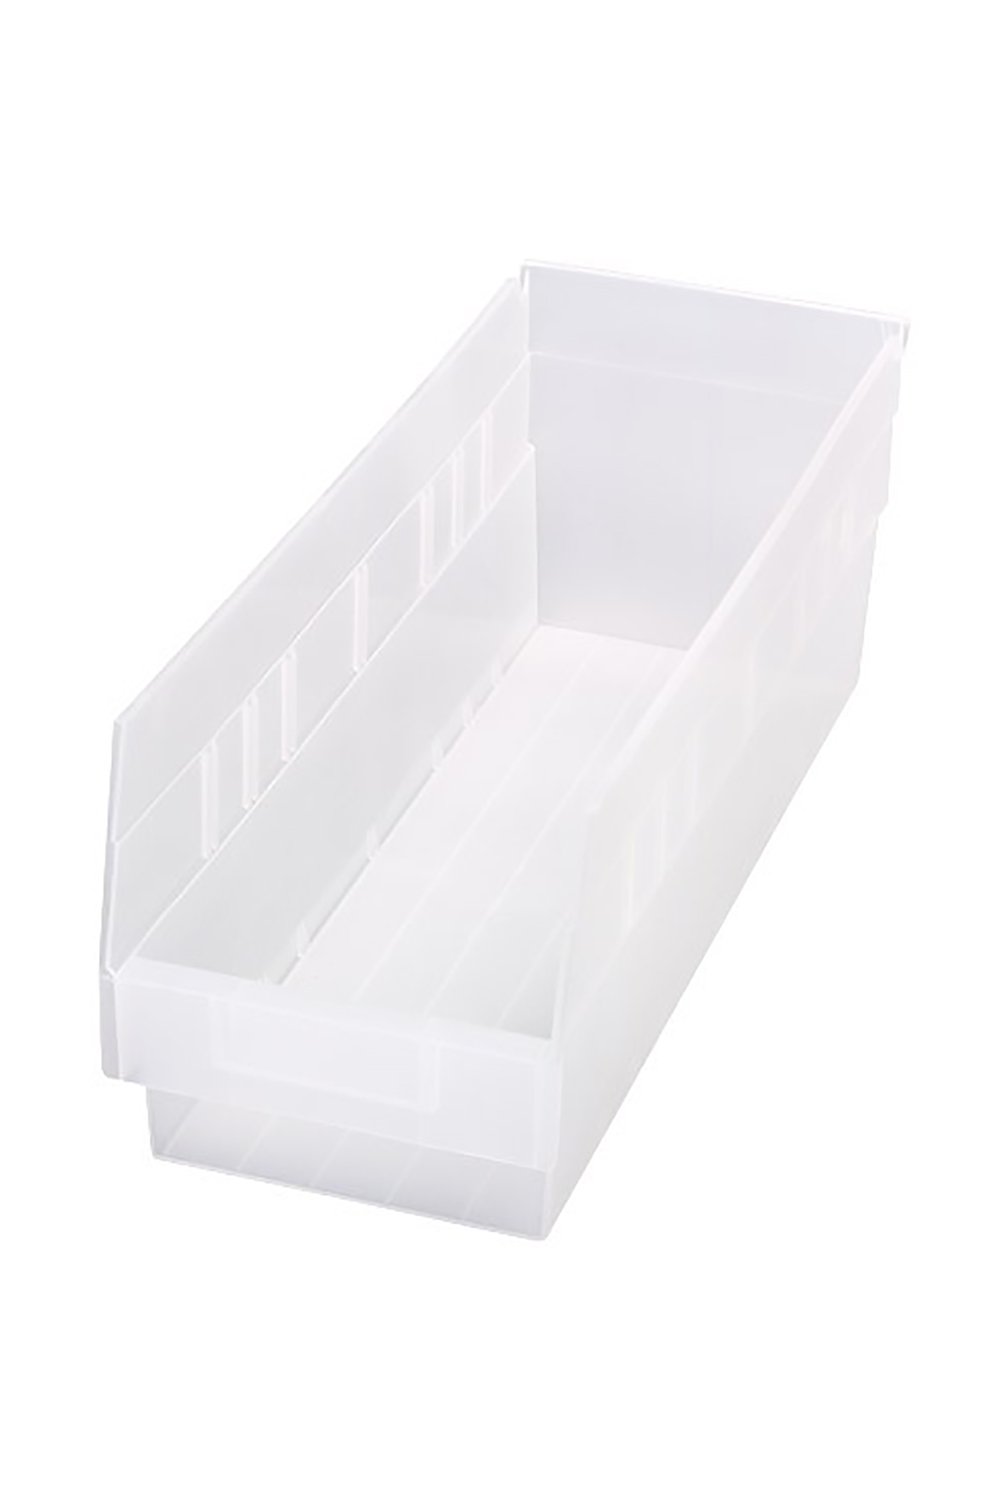 Shelf Bin for 24"D Shelves Bins & Containers Acart 17-7/8" x 6-5/8" x 6" Clear 